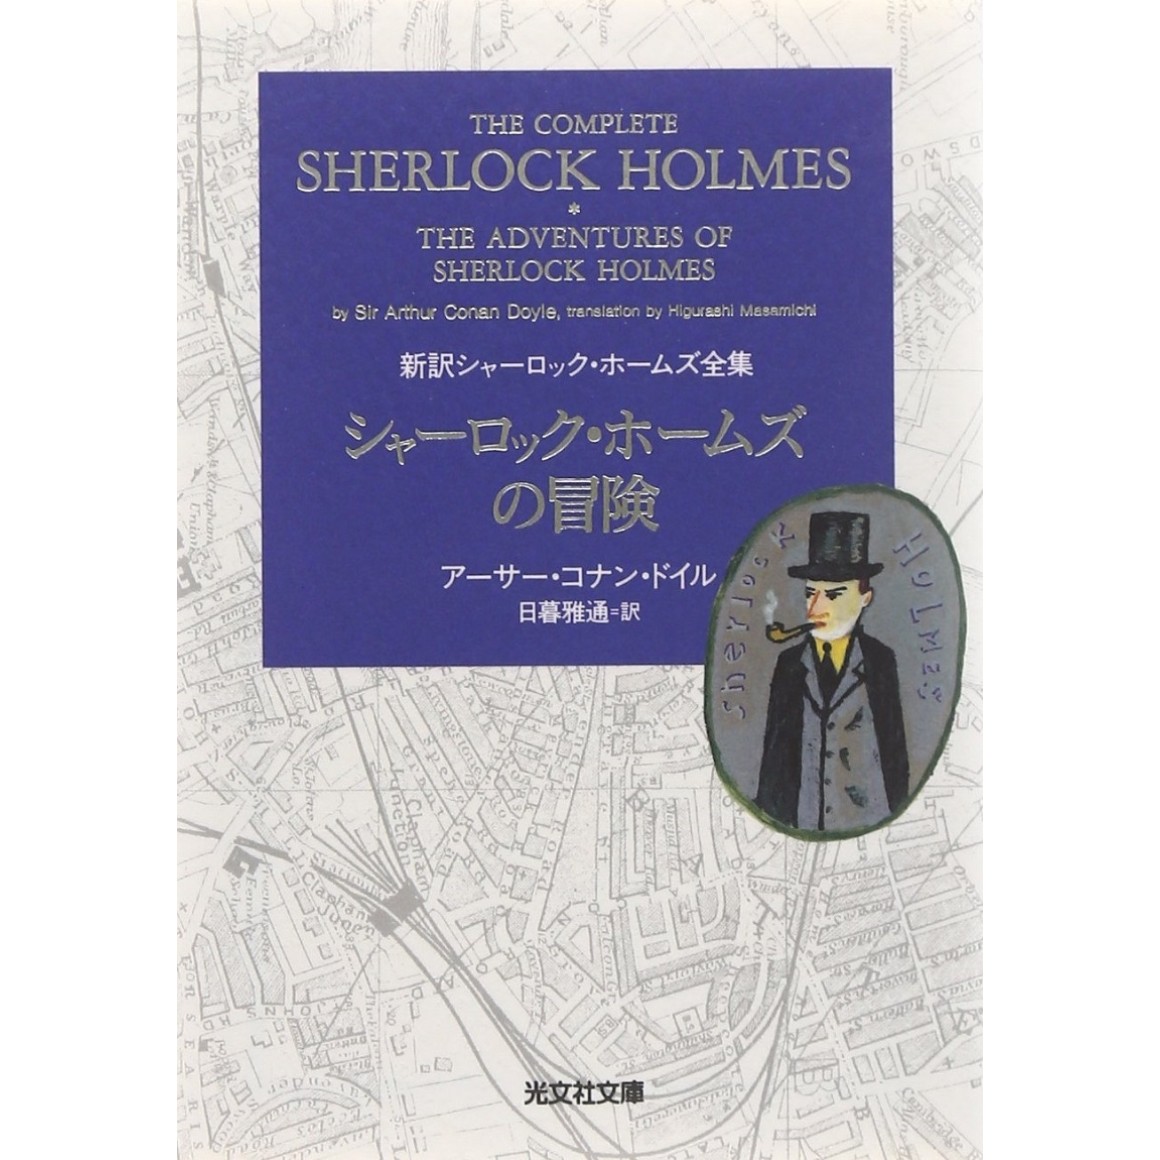 ﻿The Complete Sherlock Holmes vol. 1 - The Adventures of Sherlock